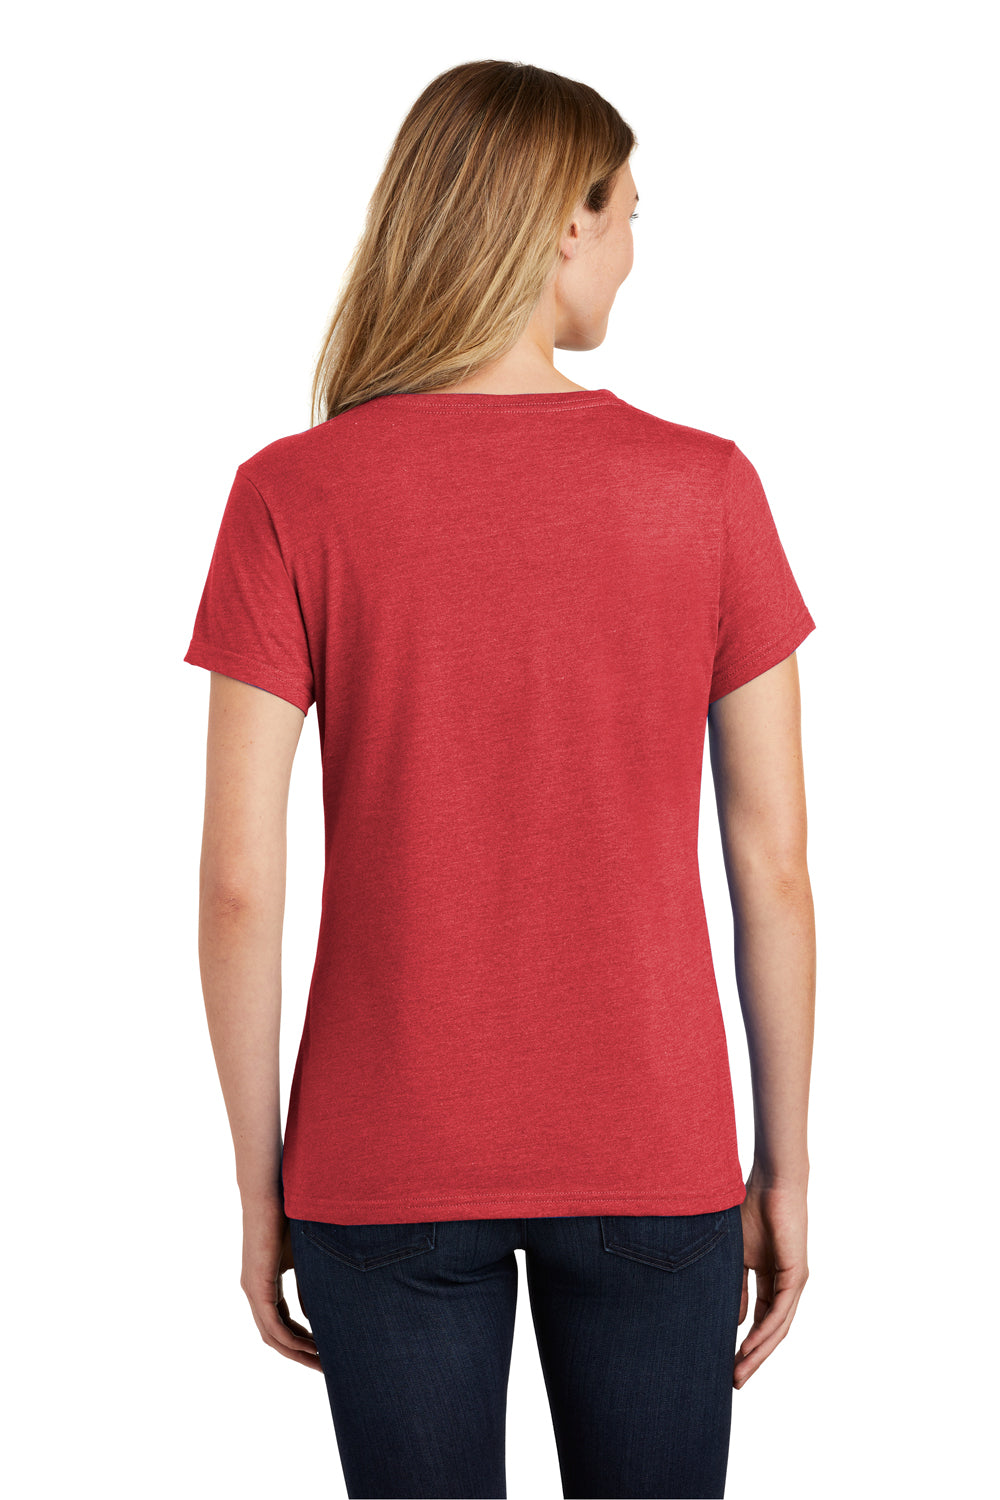 Port & Company LPC455V Womens Fan Favorite Short Sleeve V-Neck T-Shirt Heather Cardinal Red Back